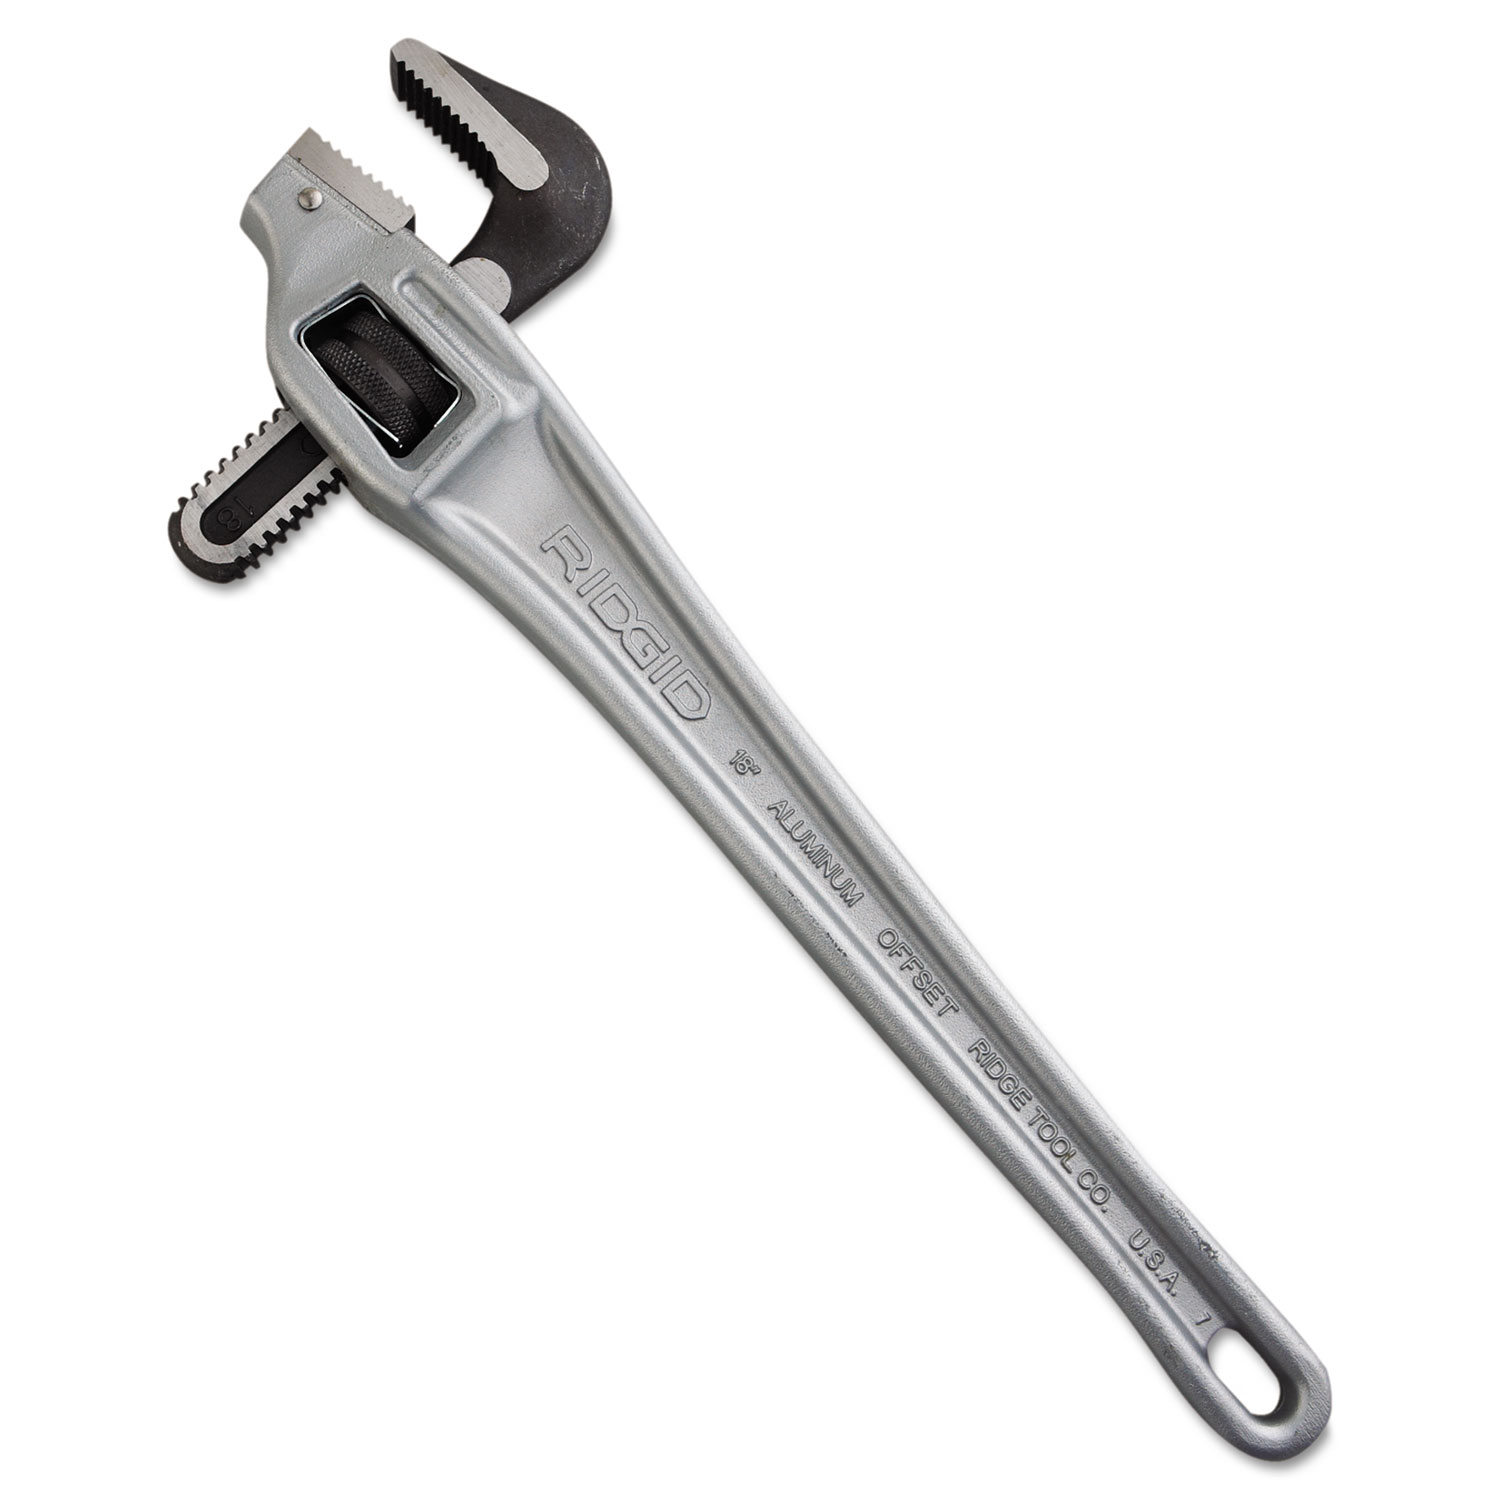 RIDGID Aluminum Handle Offset Pipe Wrench, 18 Long, 2 1/2 Jaw Capacity